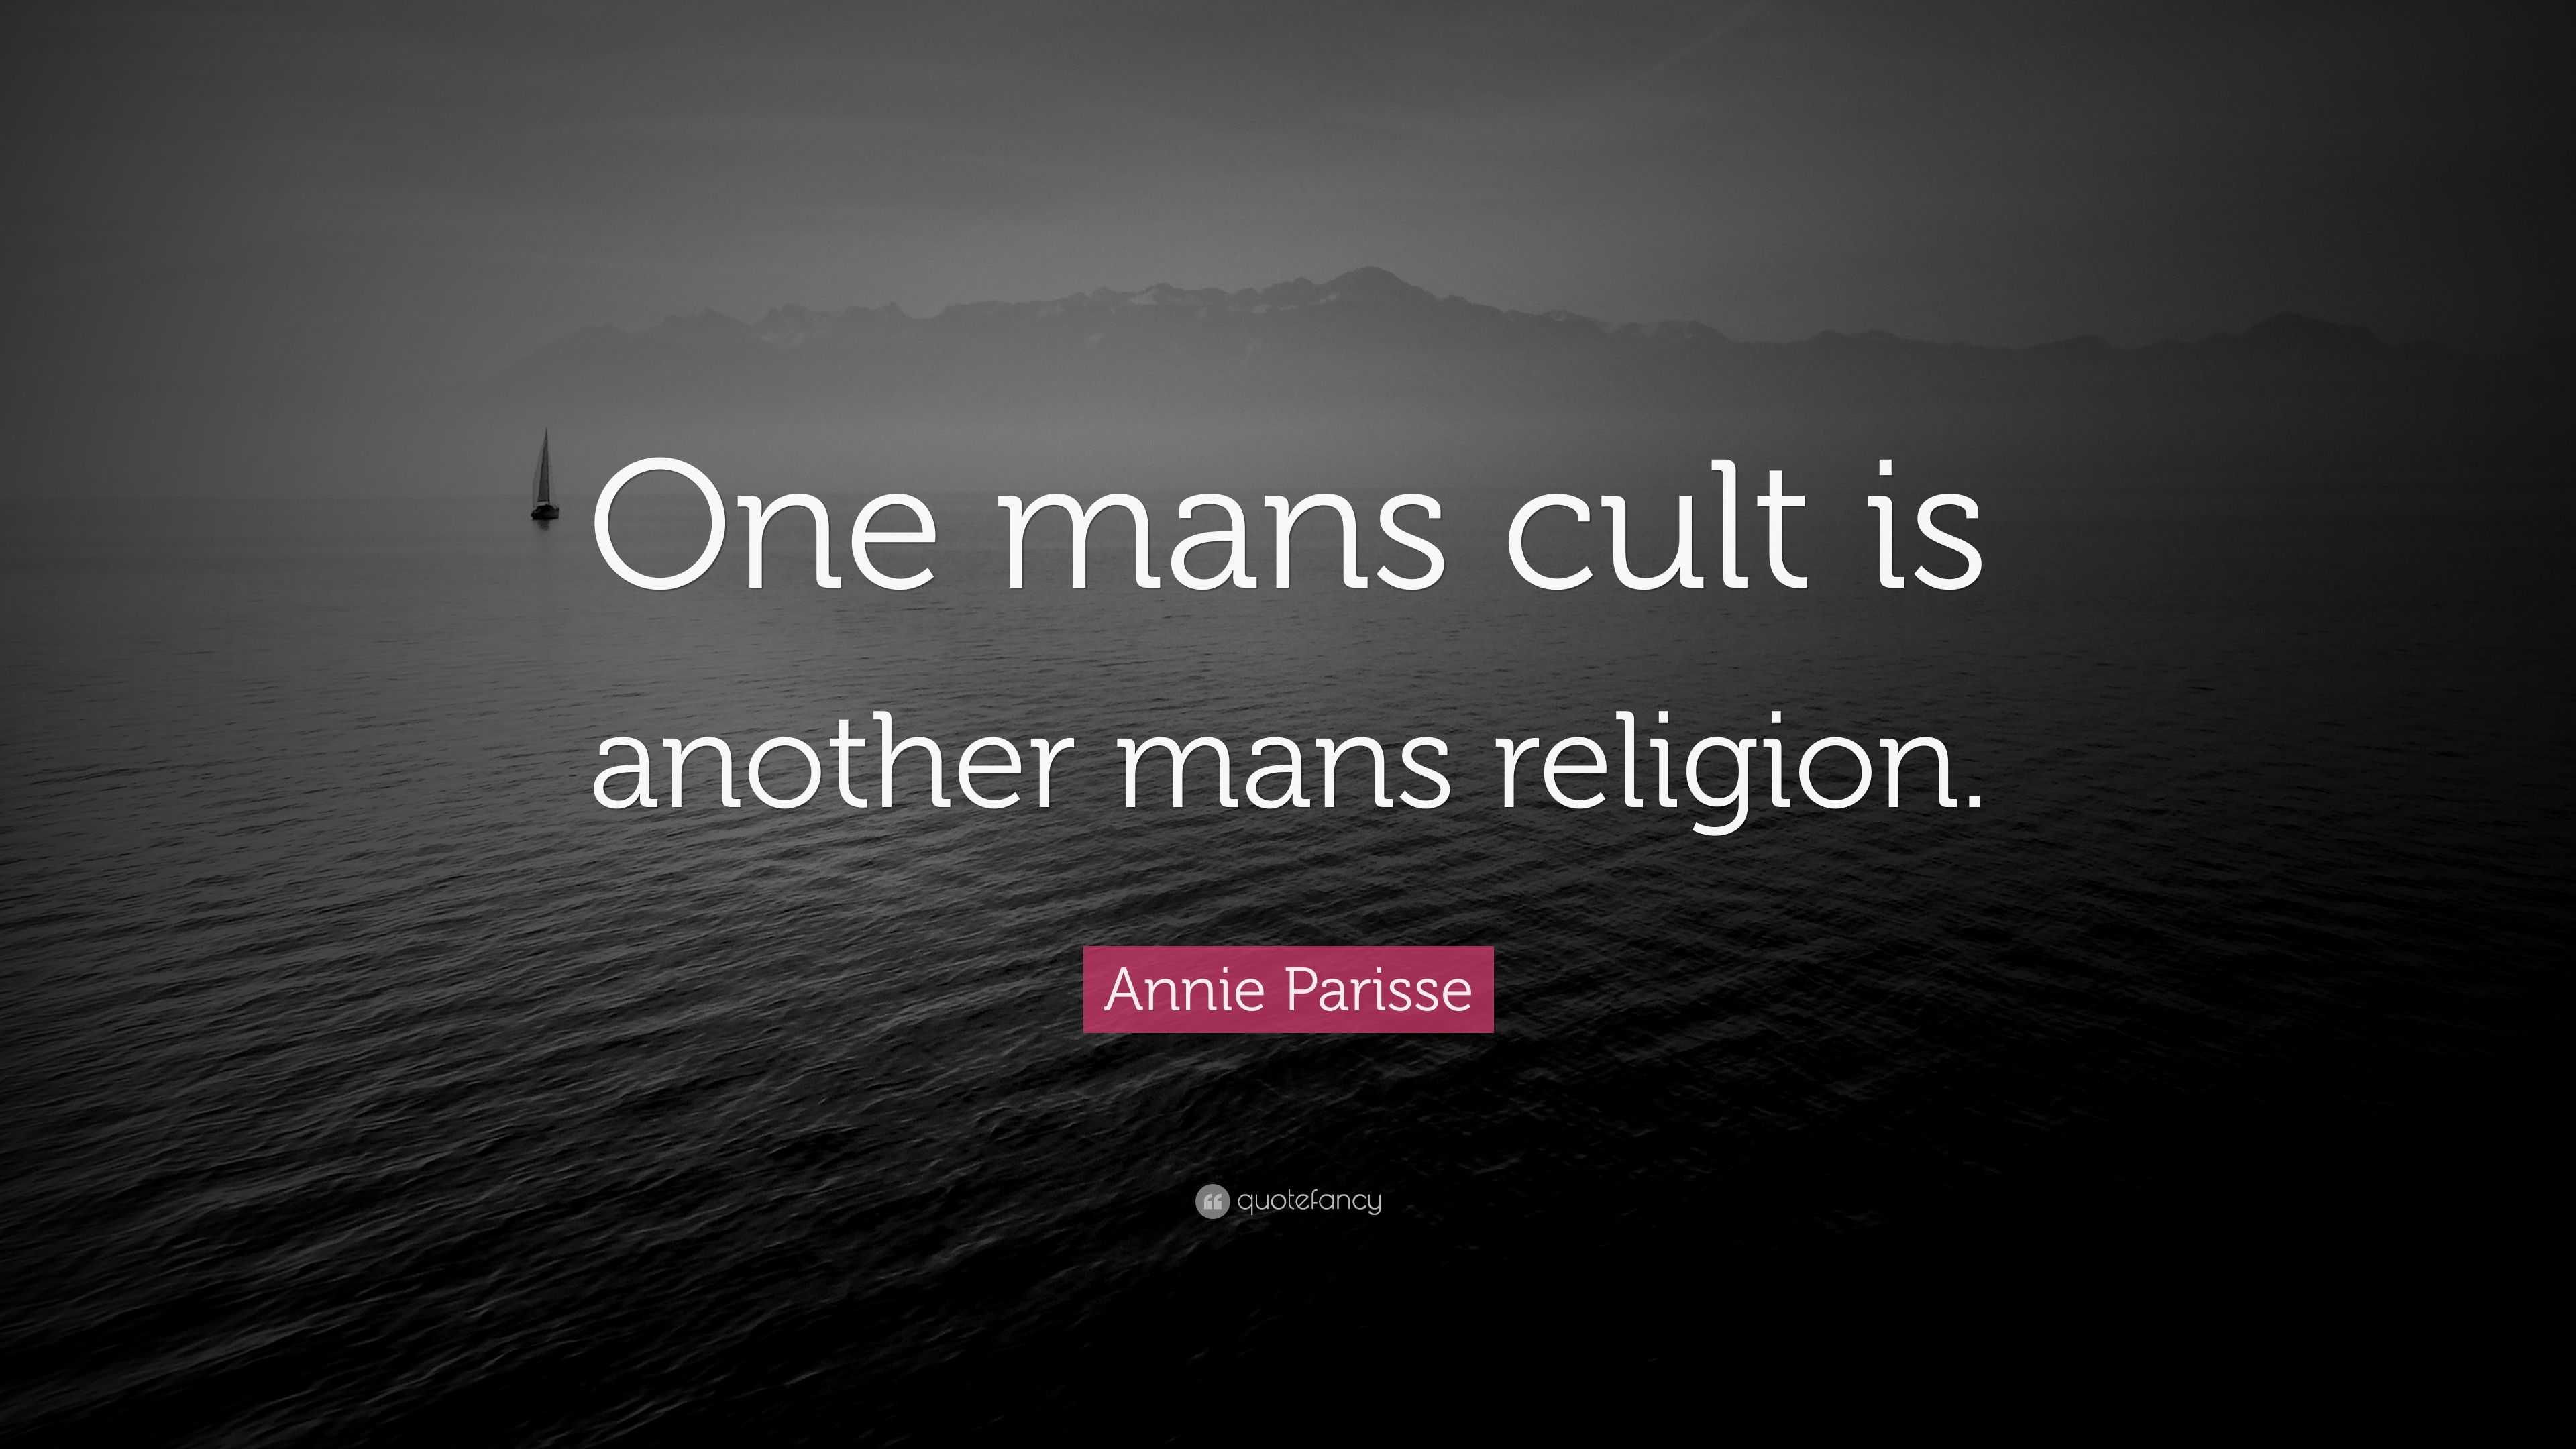 Annie Parisse Quote “one Mans Cult Is Another Mans Religion” 